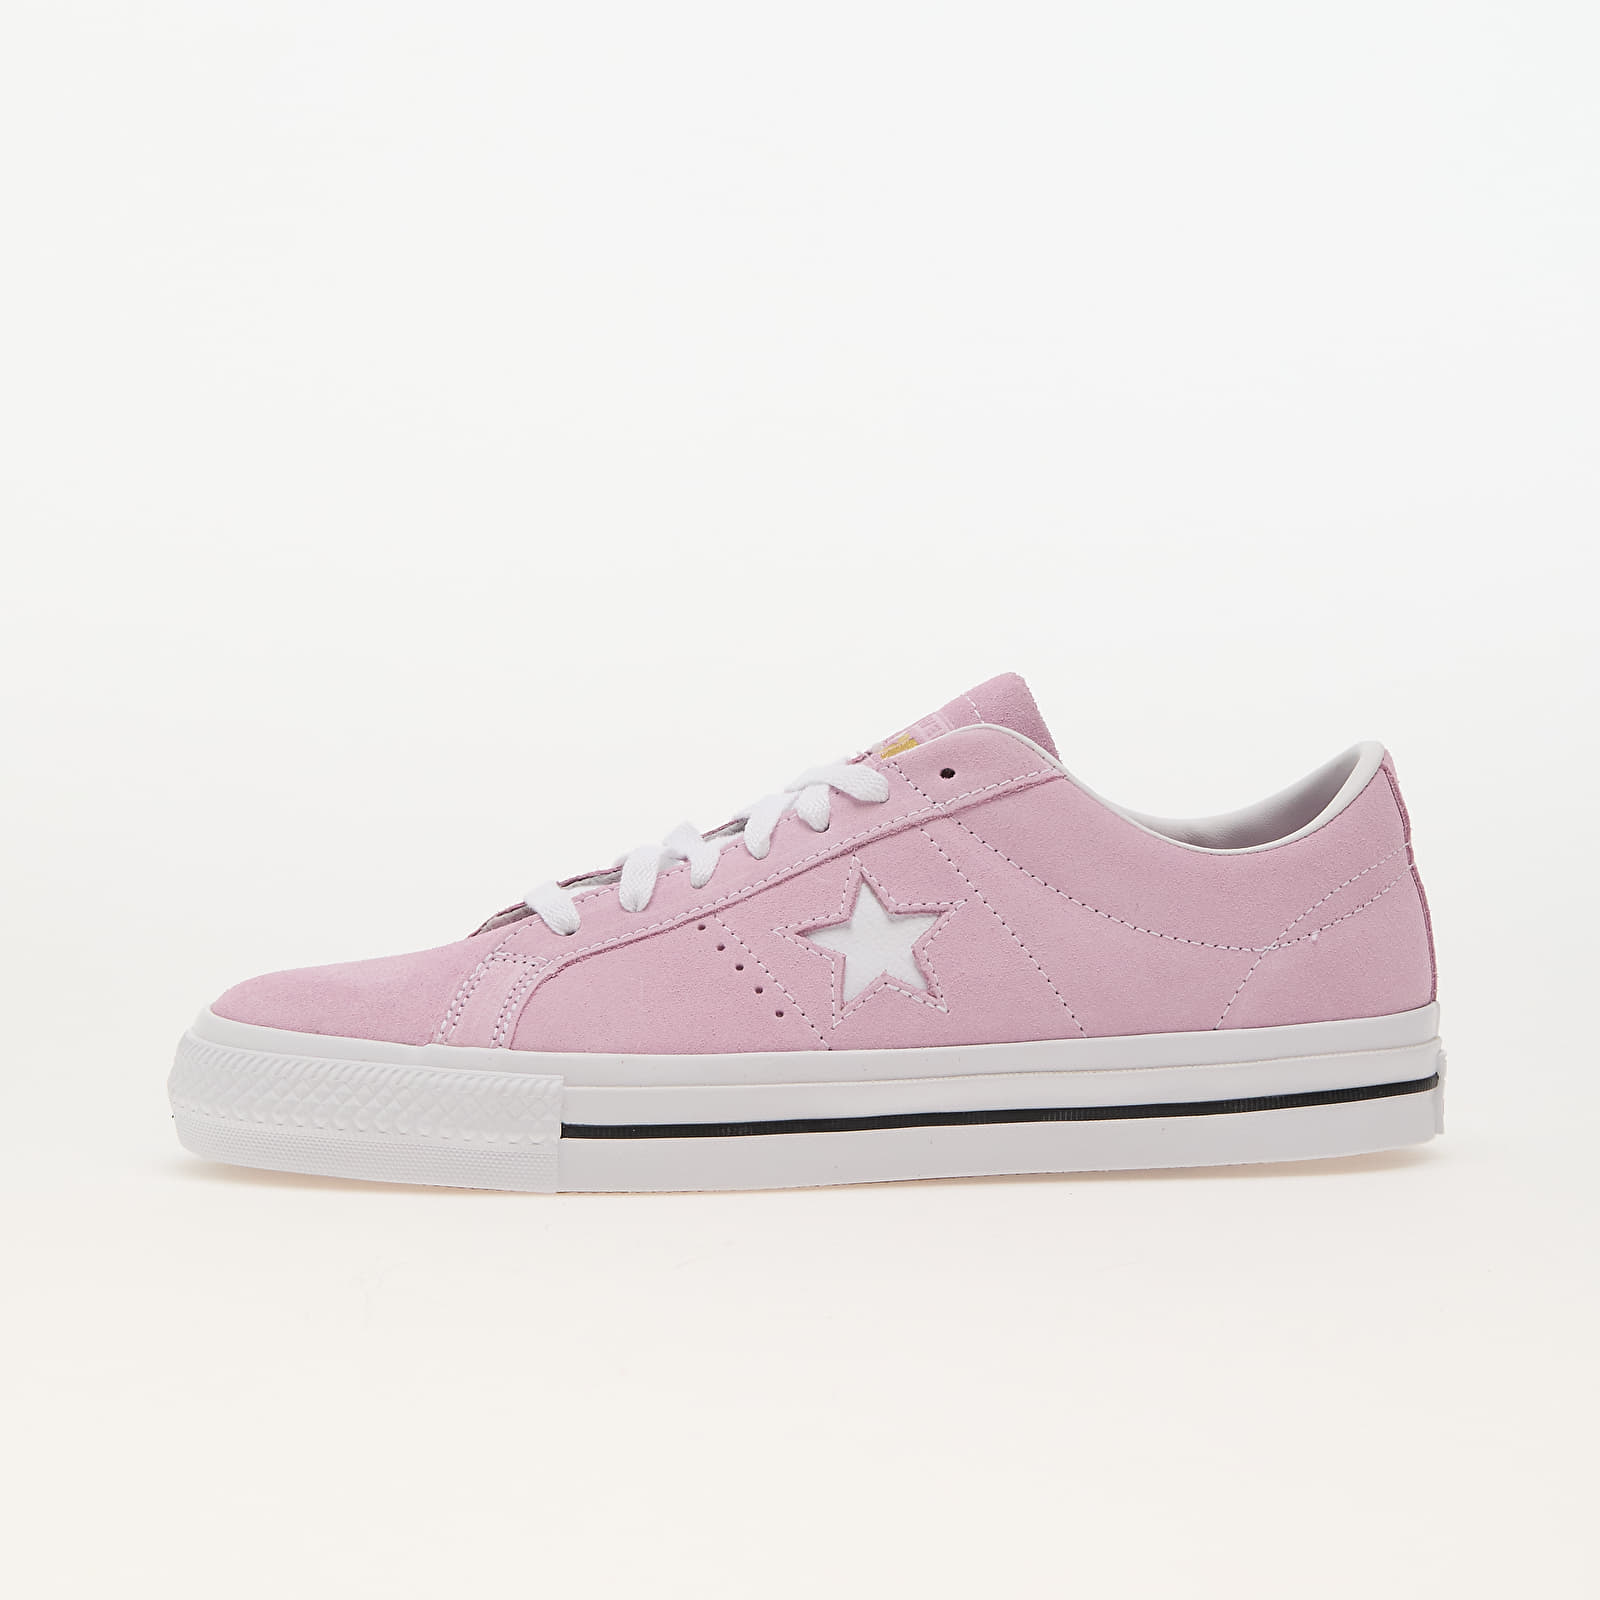 Adidași și pantofi pentru bărbați Converse One Star Pro Stardust Lilac/ White/ Black